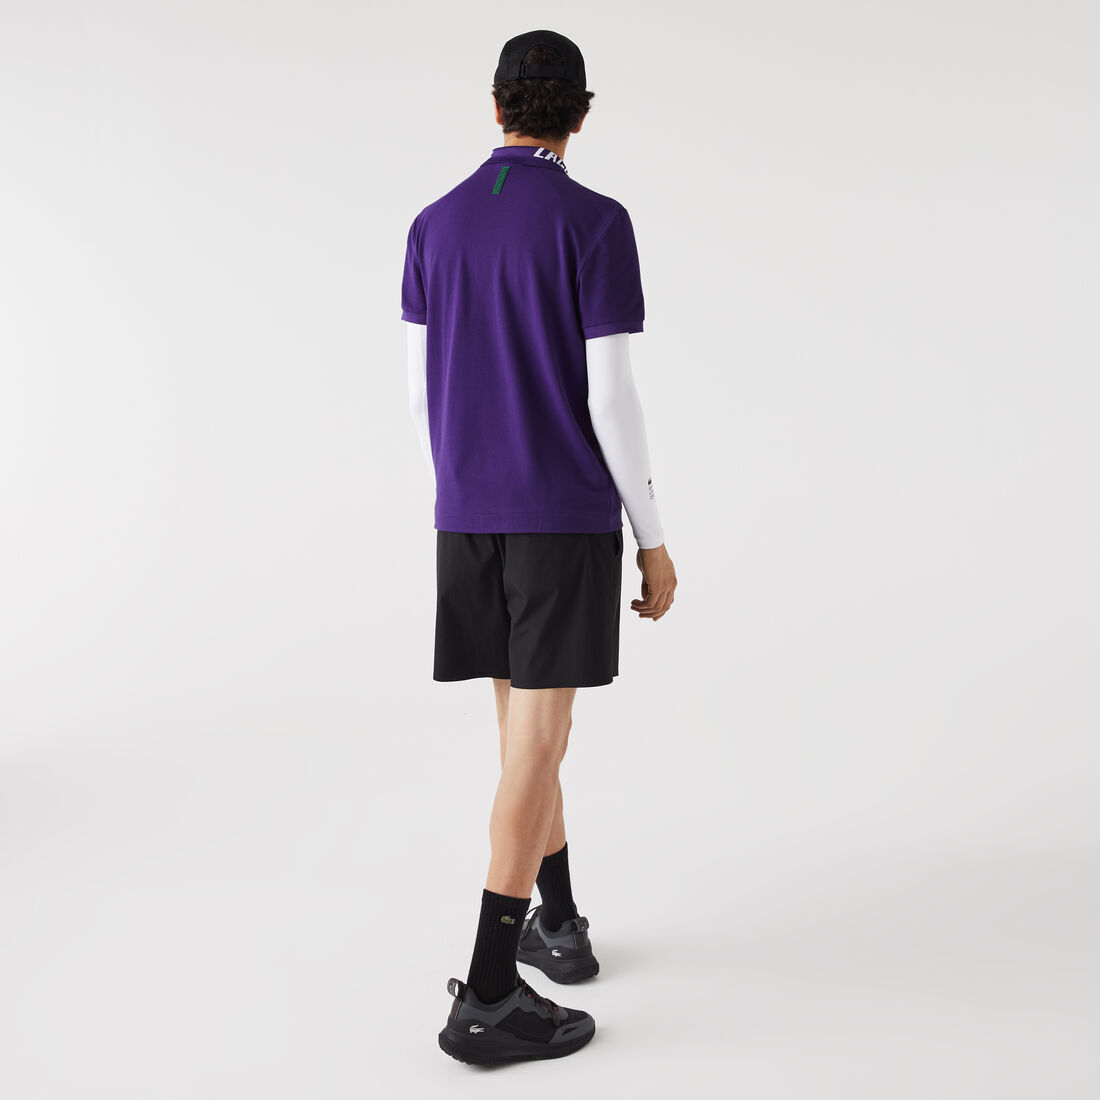 Lacoste Branded Slim Fit Stretch Piqué Polo Shirts Herren Lila | XKPM-09417